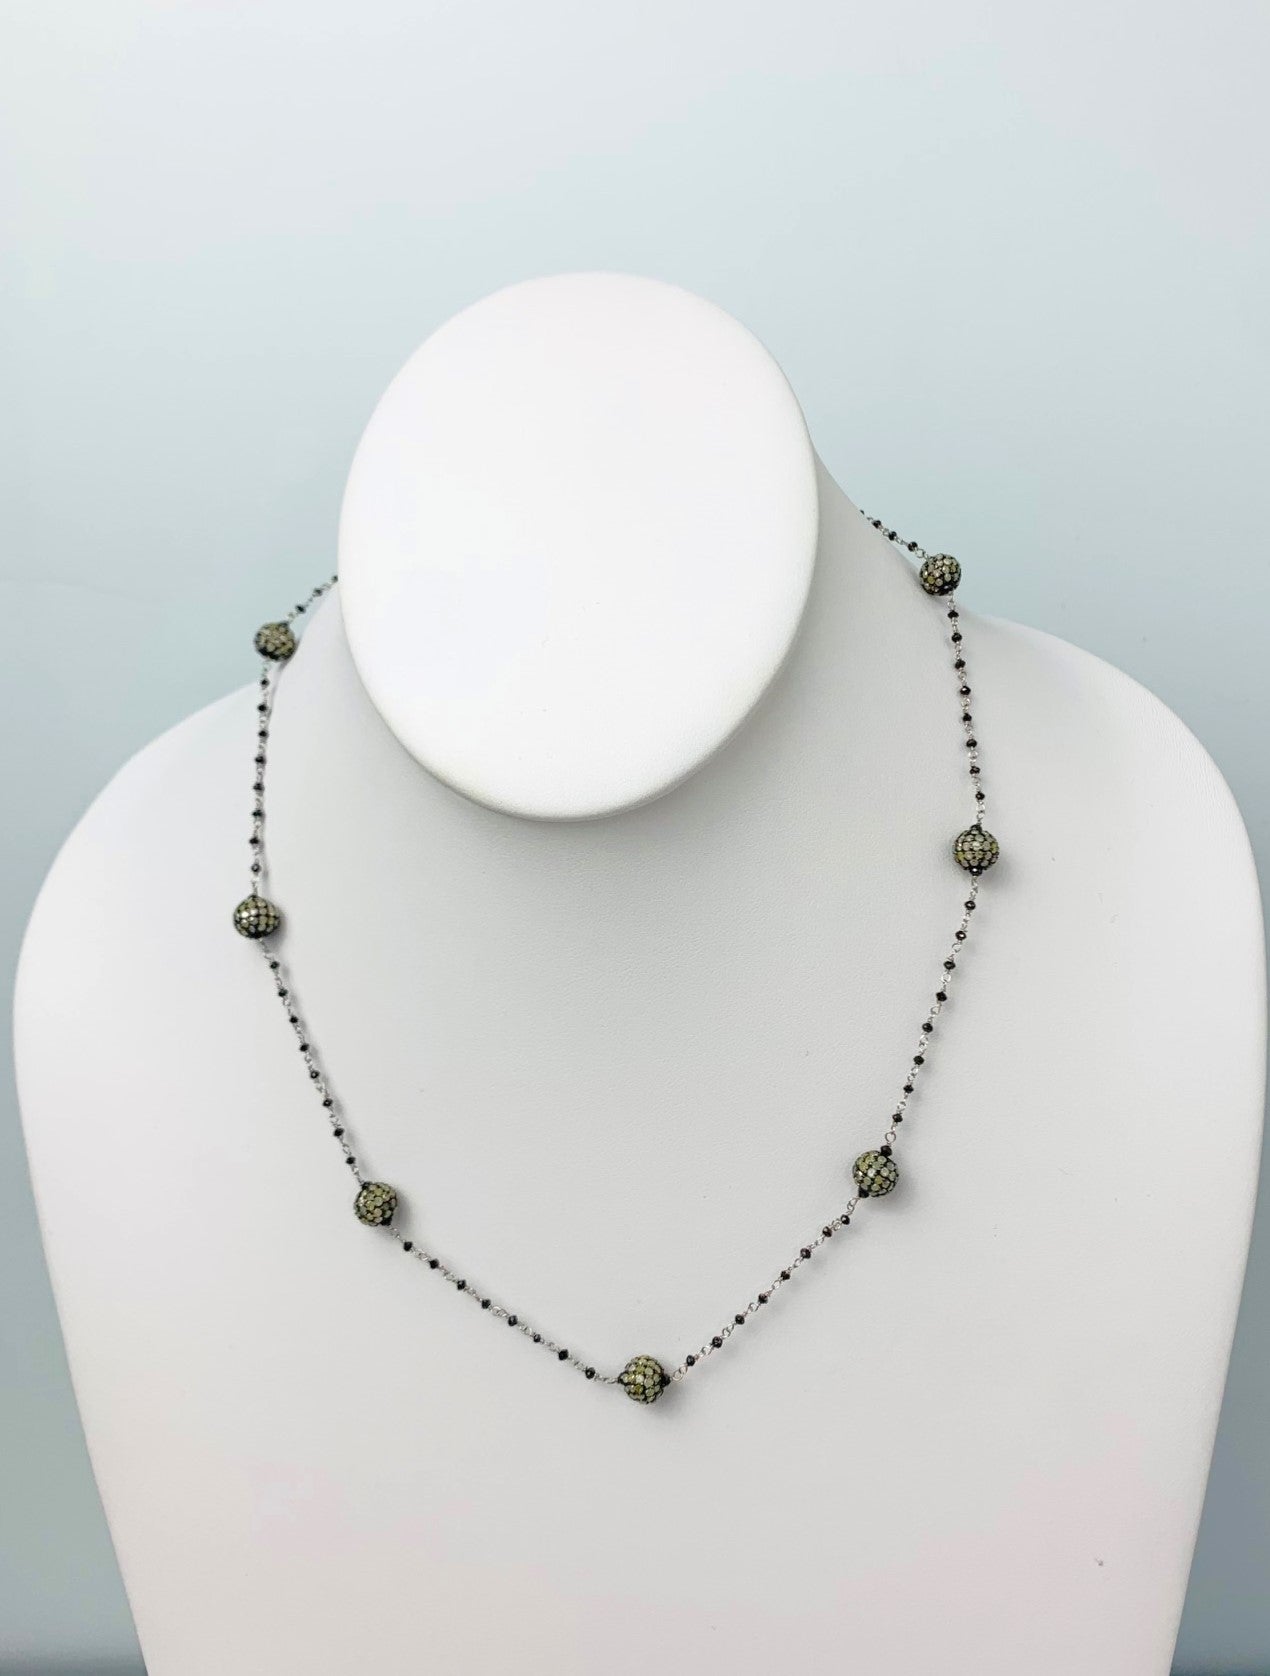 18" Antiqued Silver Pave Diamond Ball Station Black Diamond Rosary Necklace in 14KW & SS - NCK-481-DCOROSDIA14WSS-BK-18